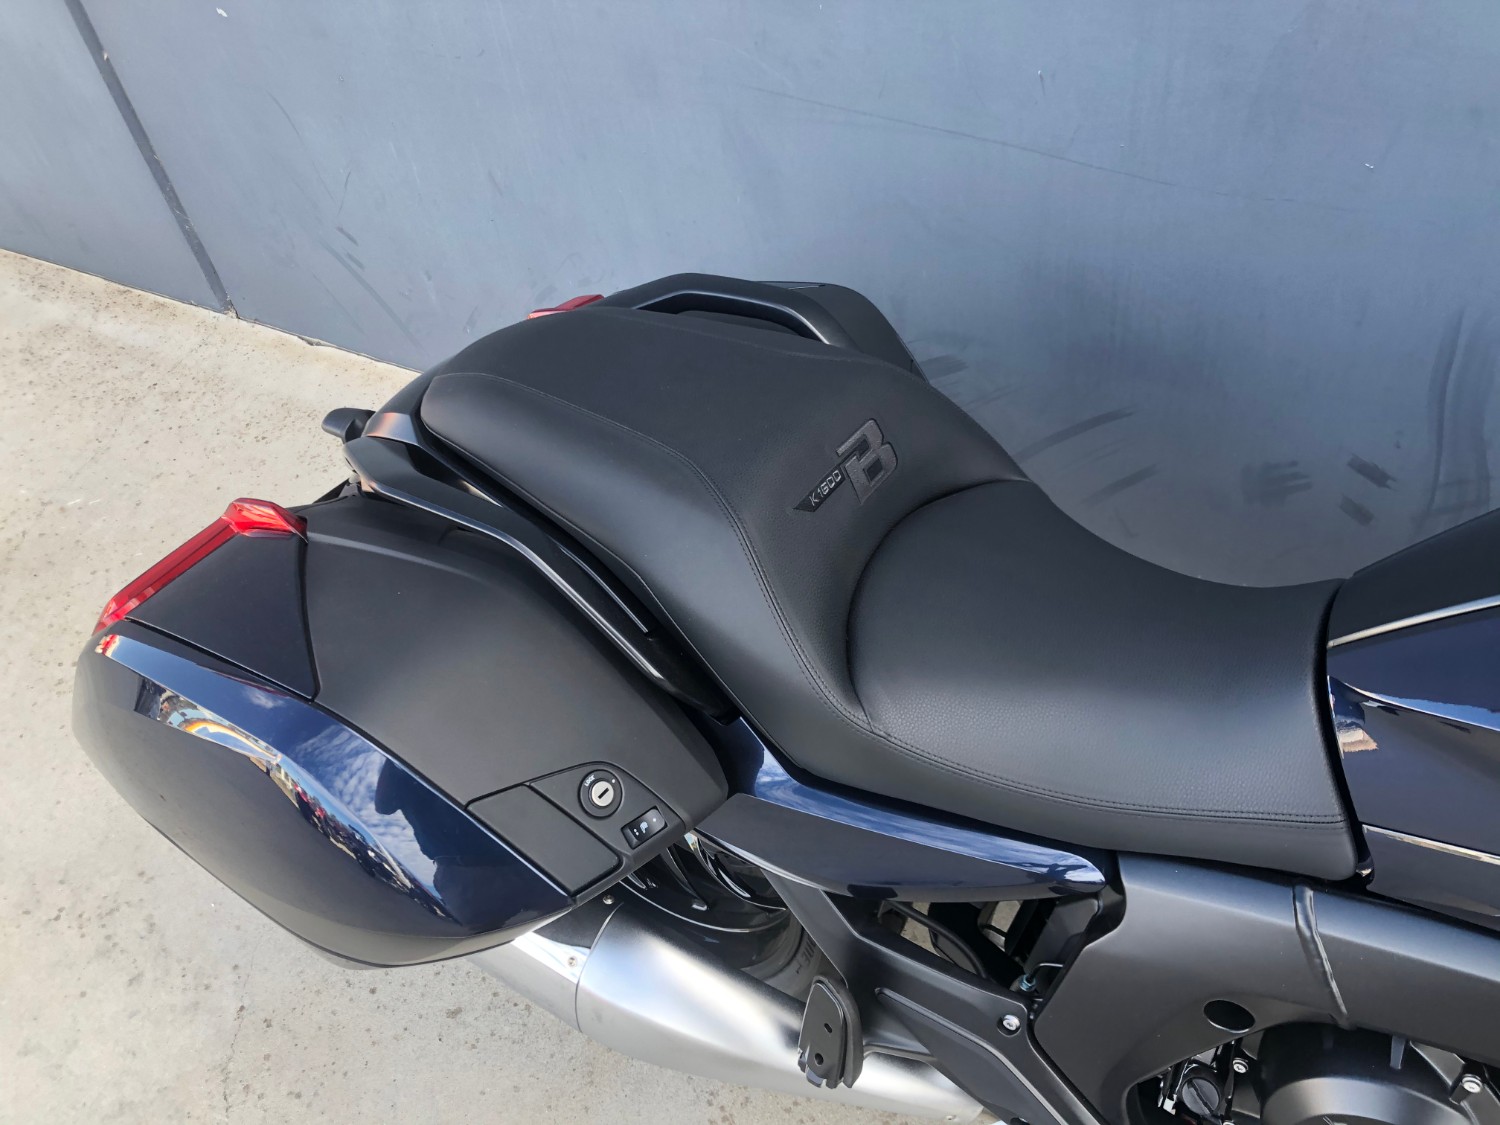 2019 BMW K1600 B Deluxe Motorcycle Image 25